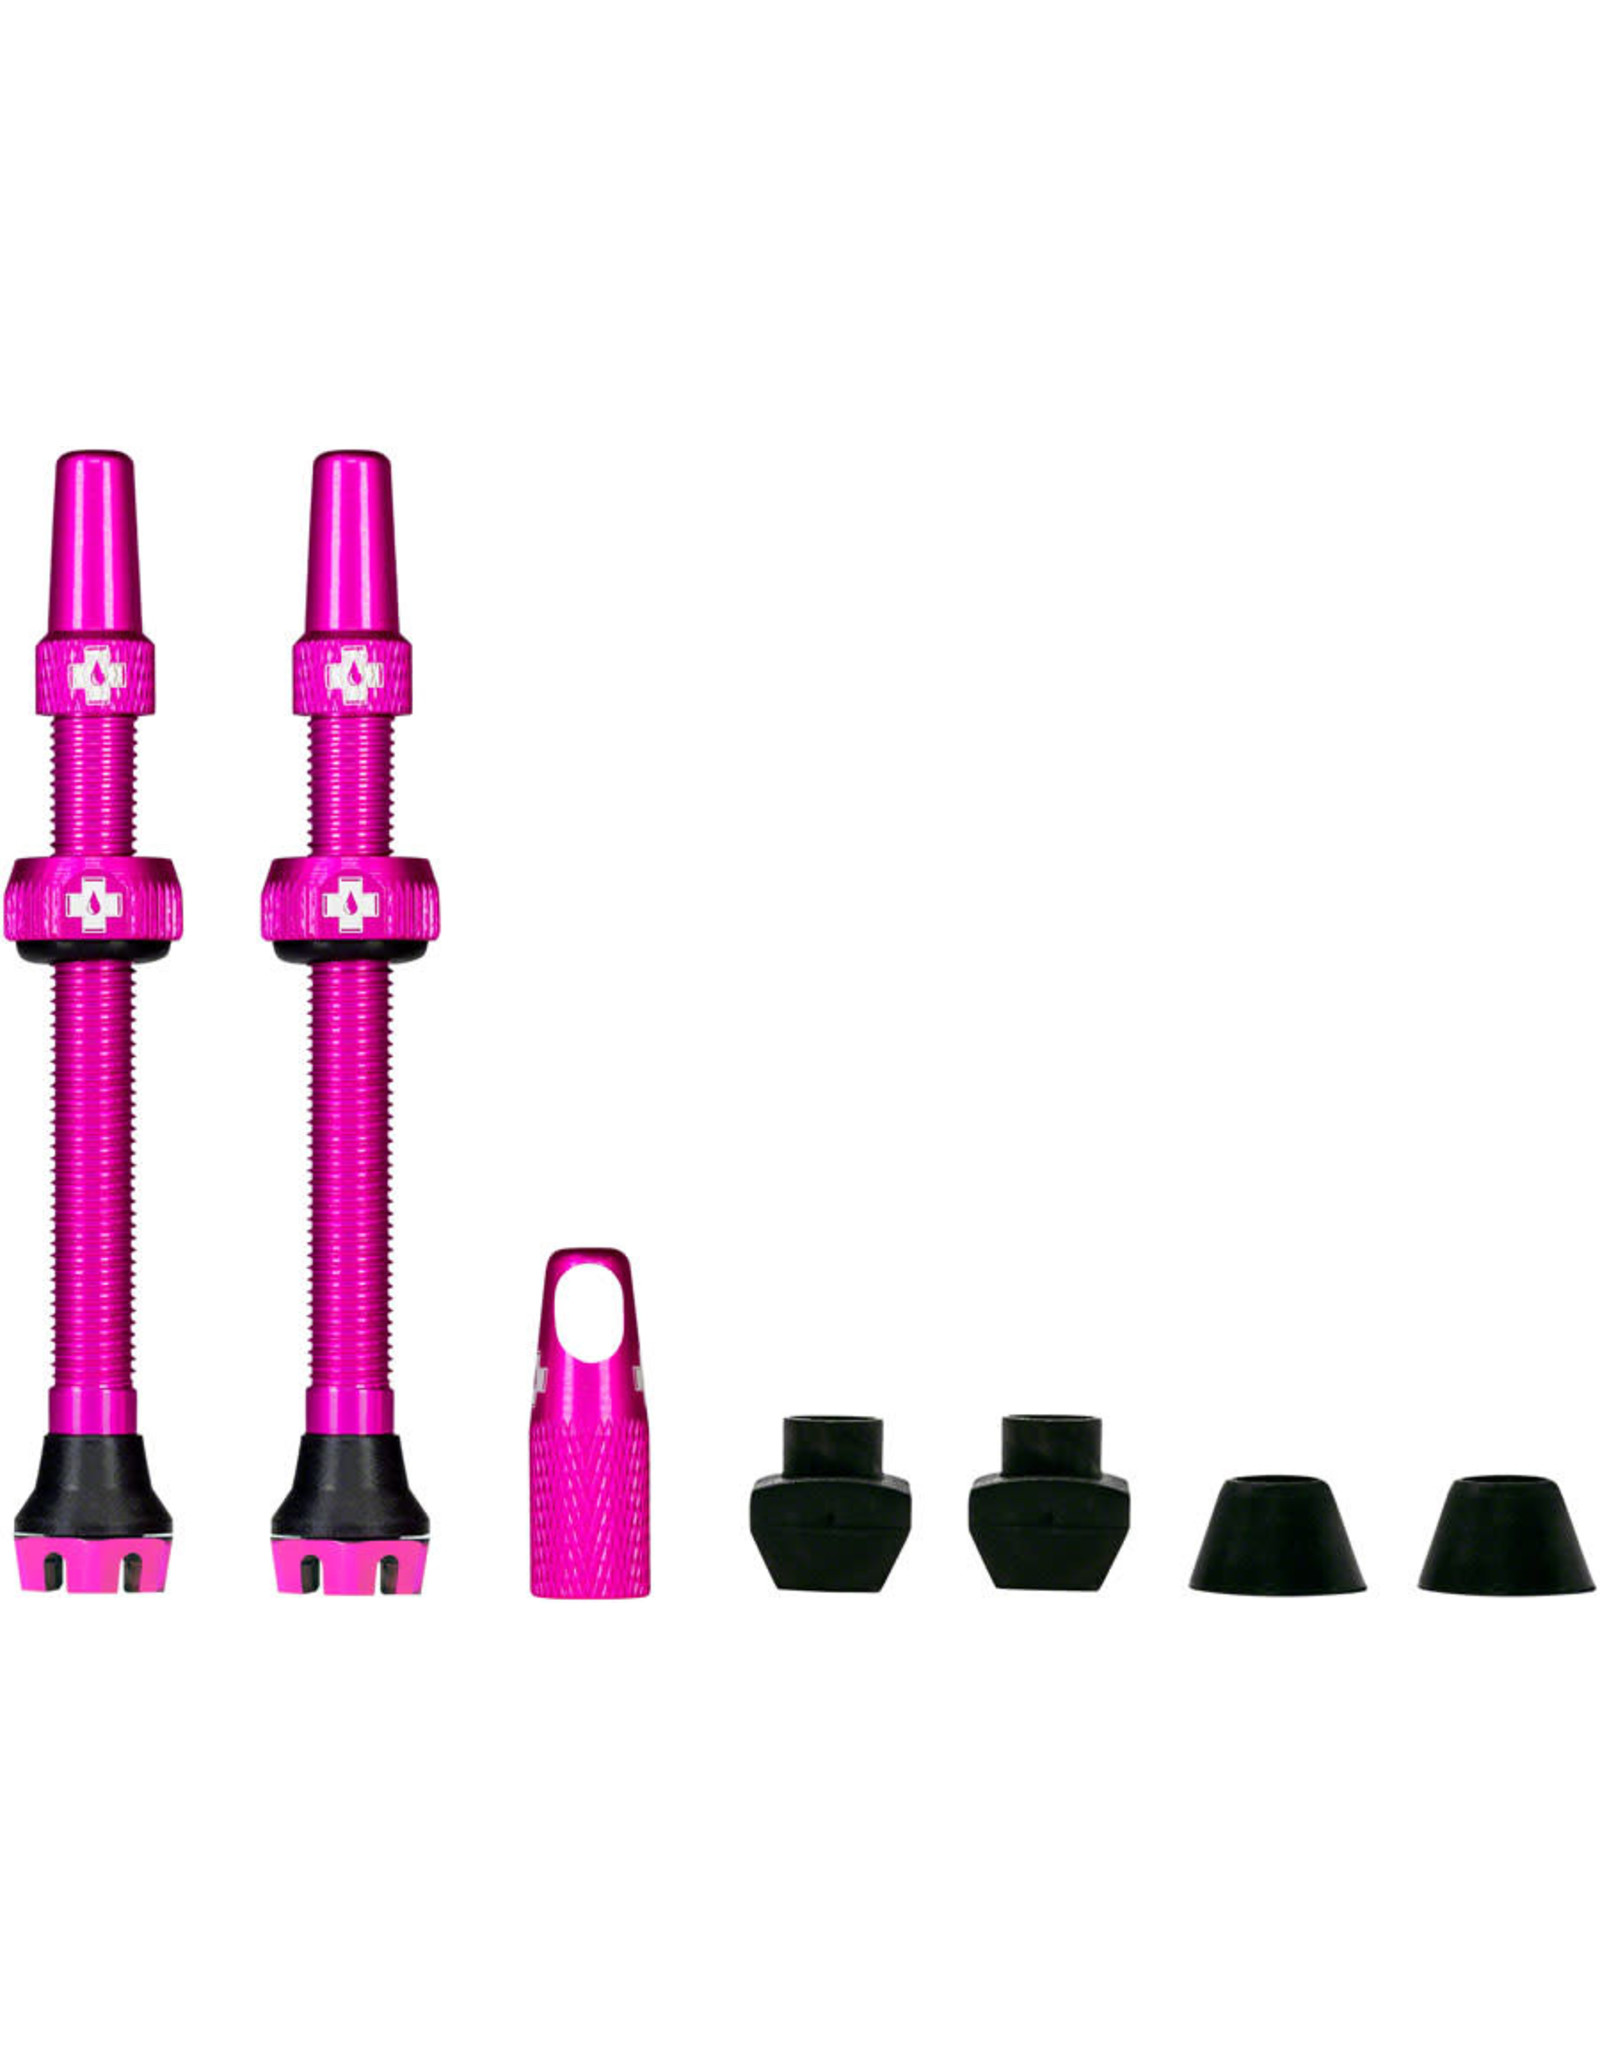 Muc-Off Muc-Off V2 Tubeless Valve Kit - Pink 44mm Pair